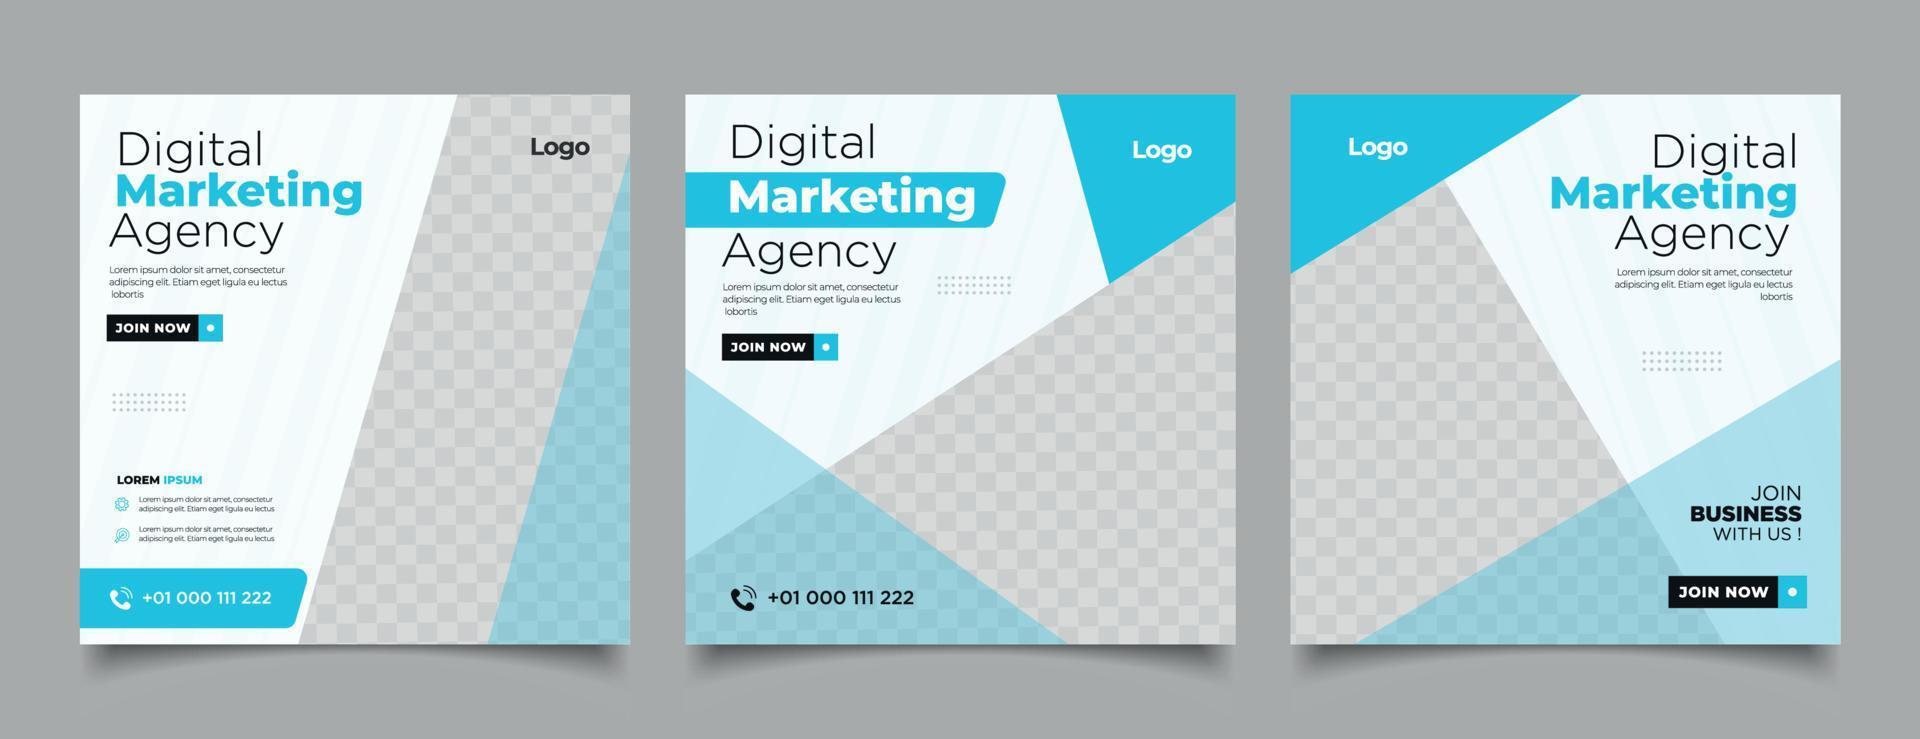 Digital marketing agency with paper texture social media post vector